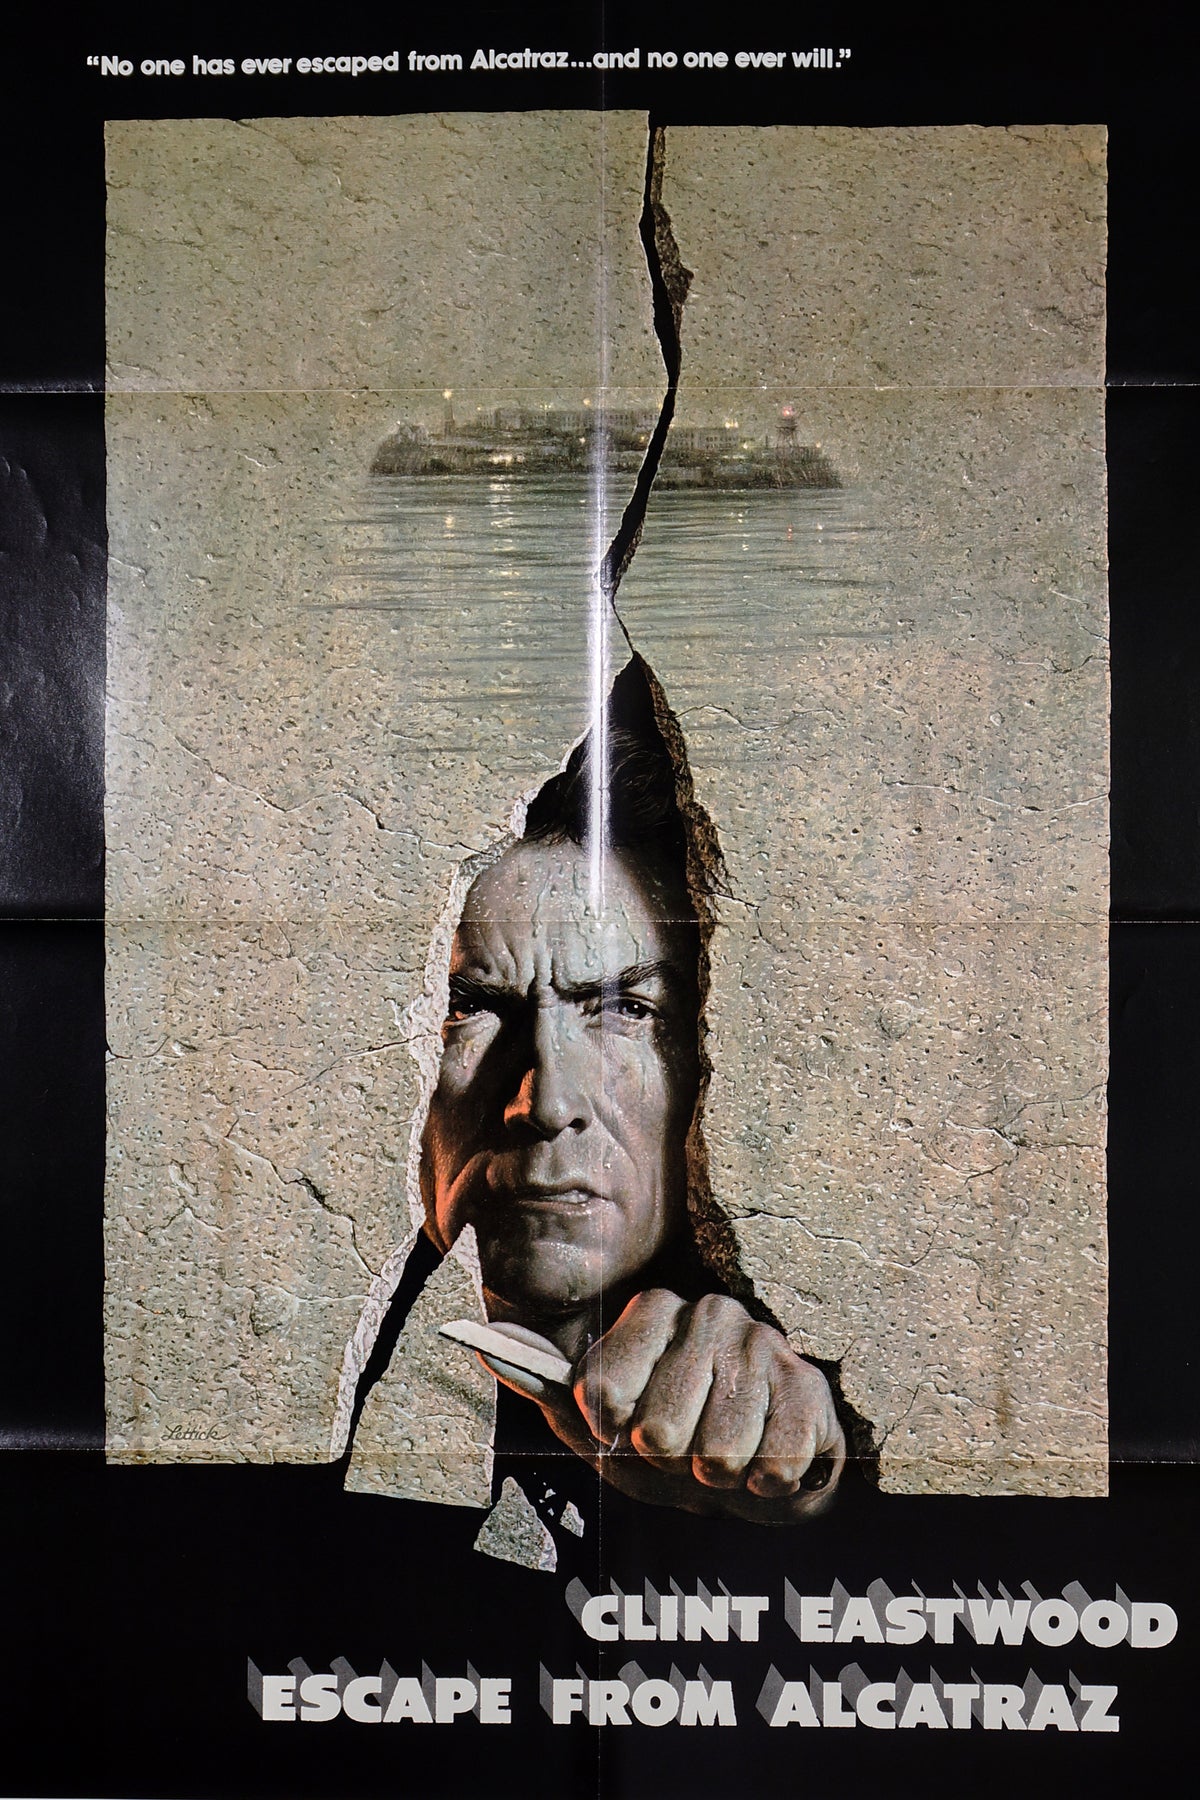 Escape From Alcatraz - Authentic Vintage Poster